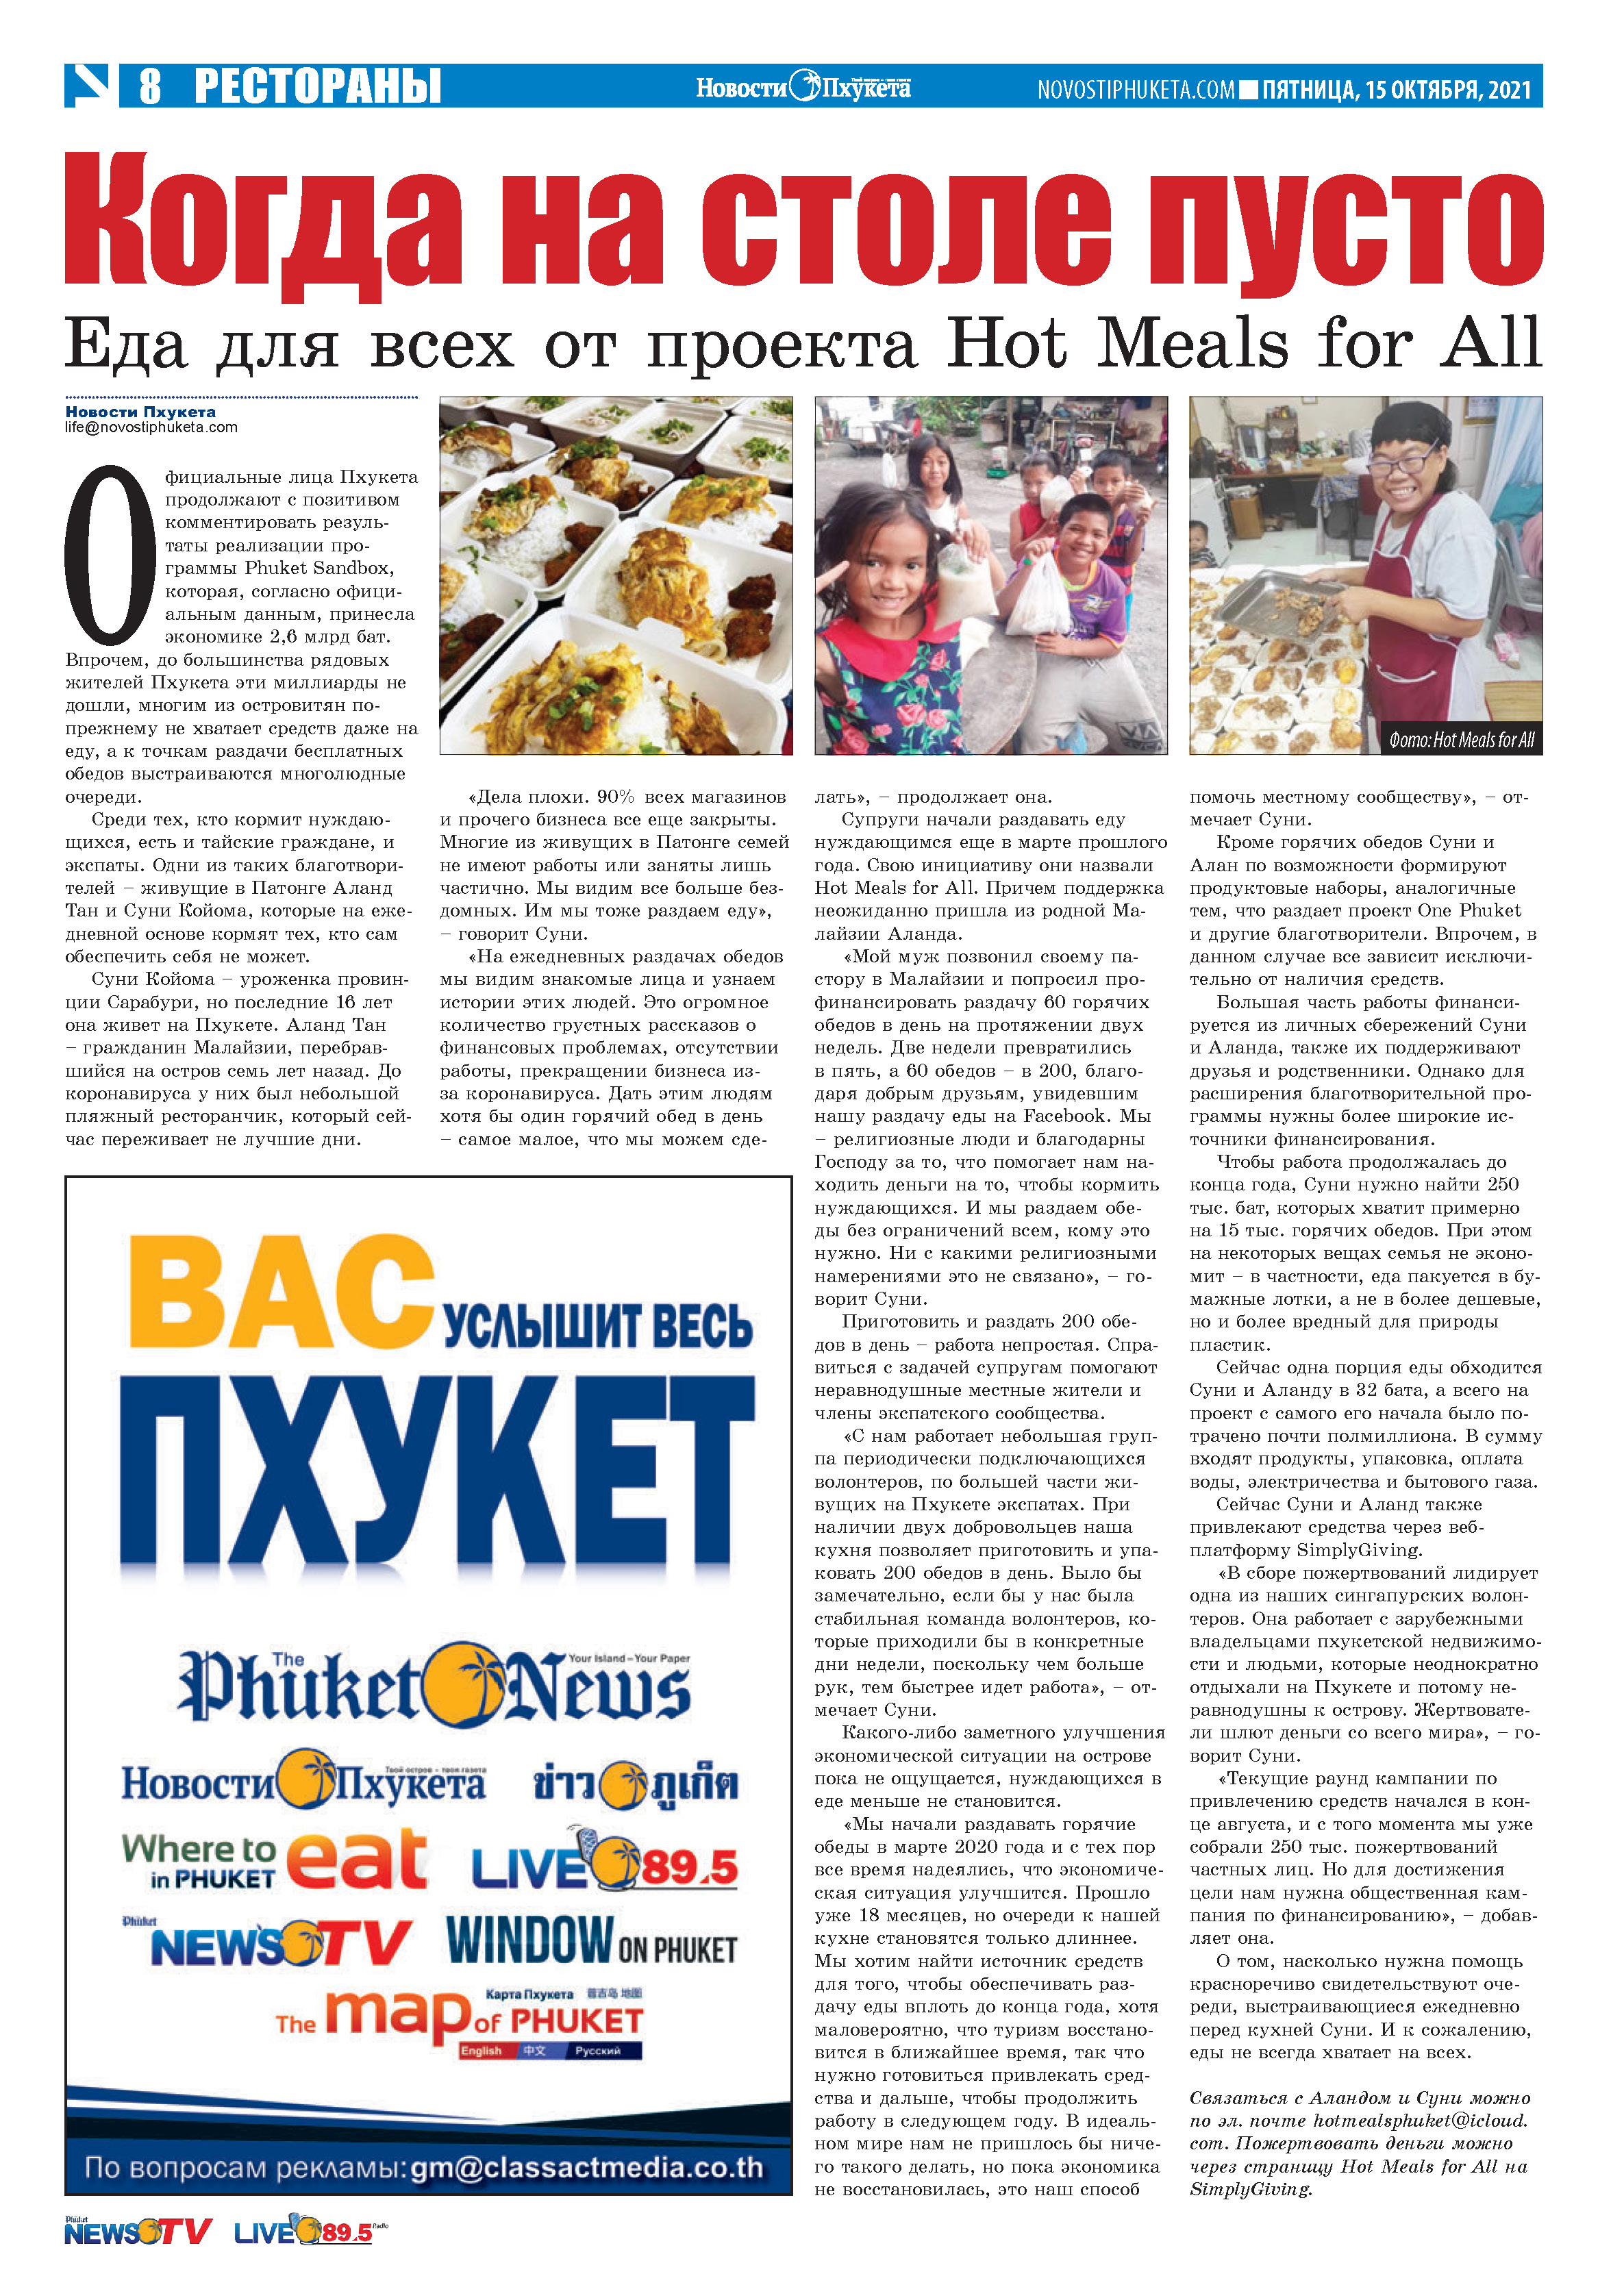 Phuket Newspaper - https://www.novostiphuketa.com/archive/15-10-2021/15-10-2021_Page_08.jpg